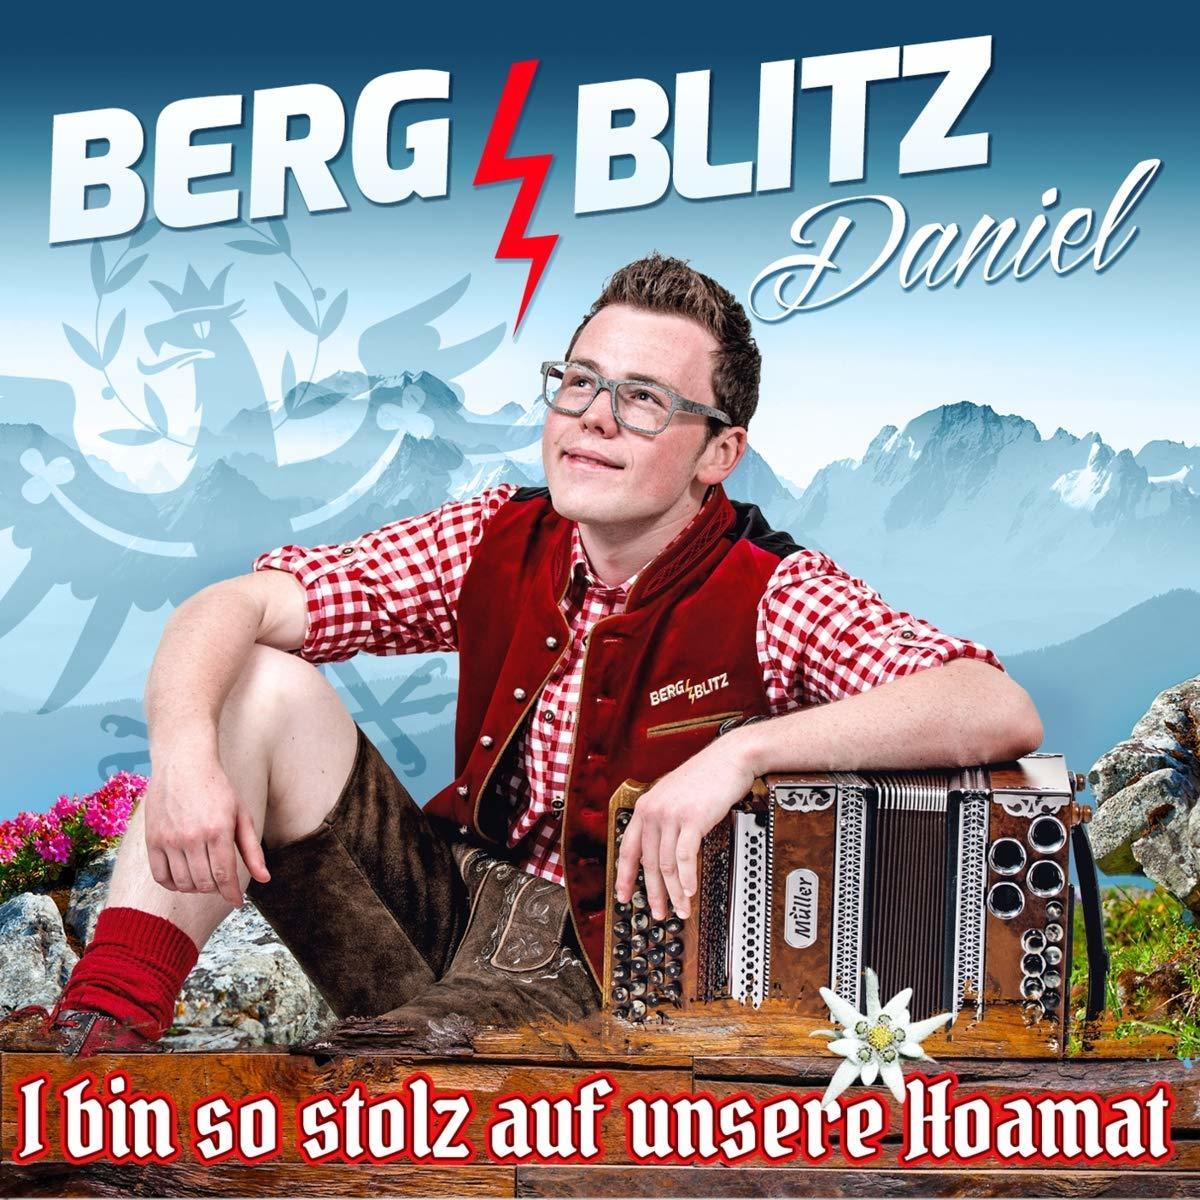 Bergblitz Daniel - so unsere Hoamat - bin auf I stolz (CD)